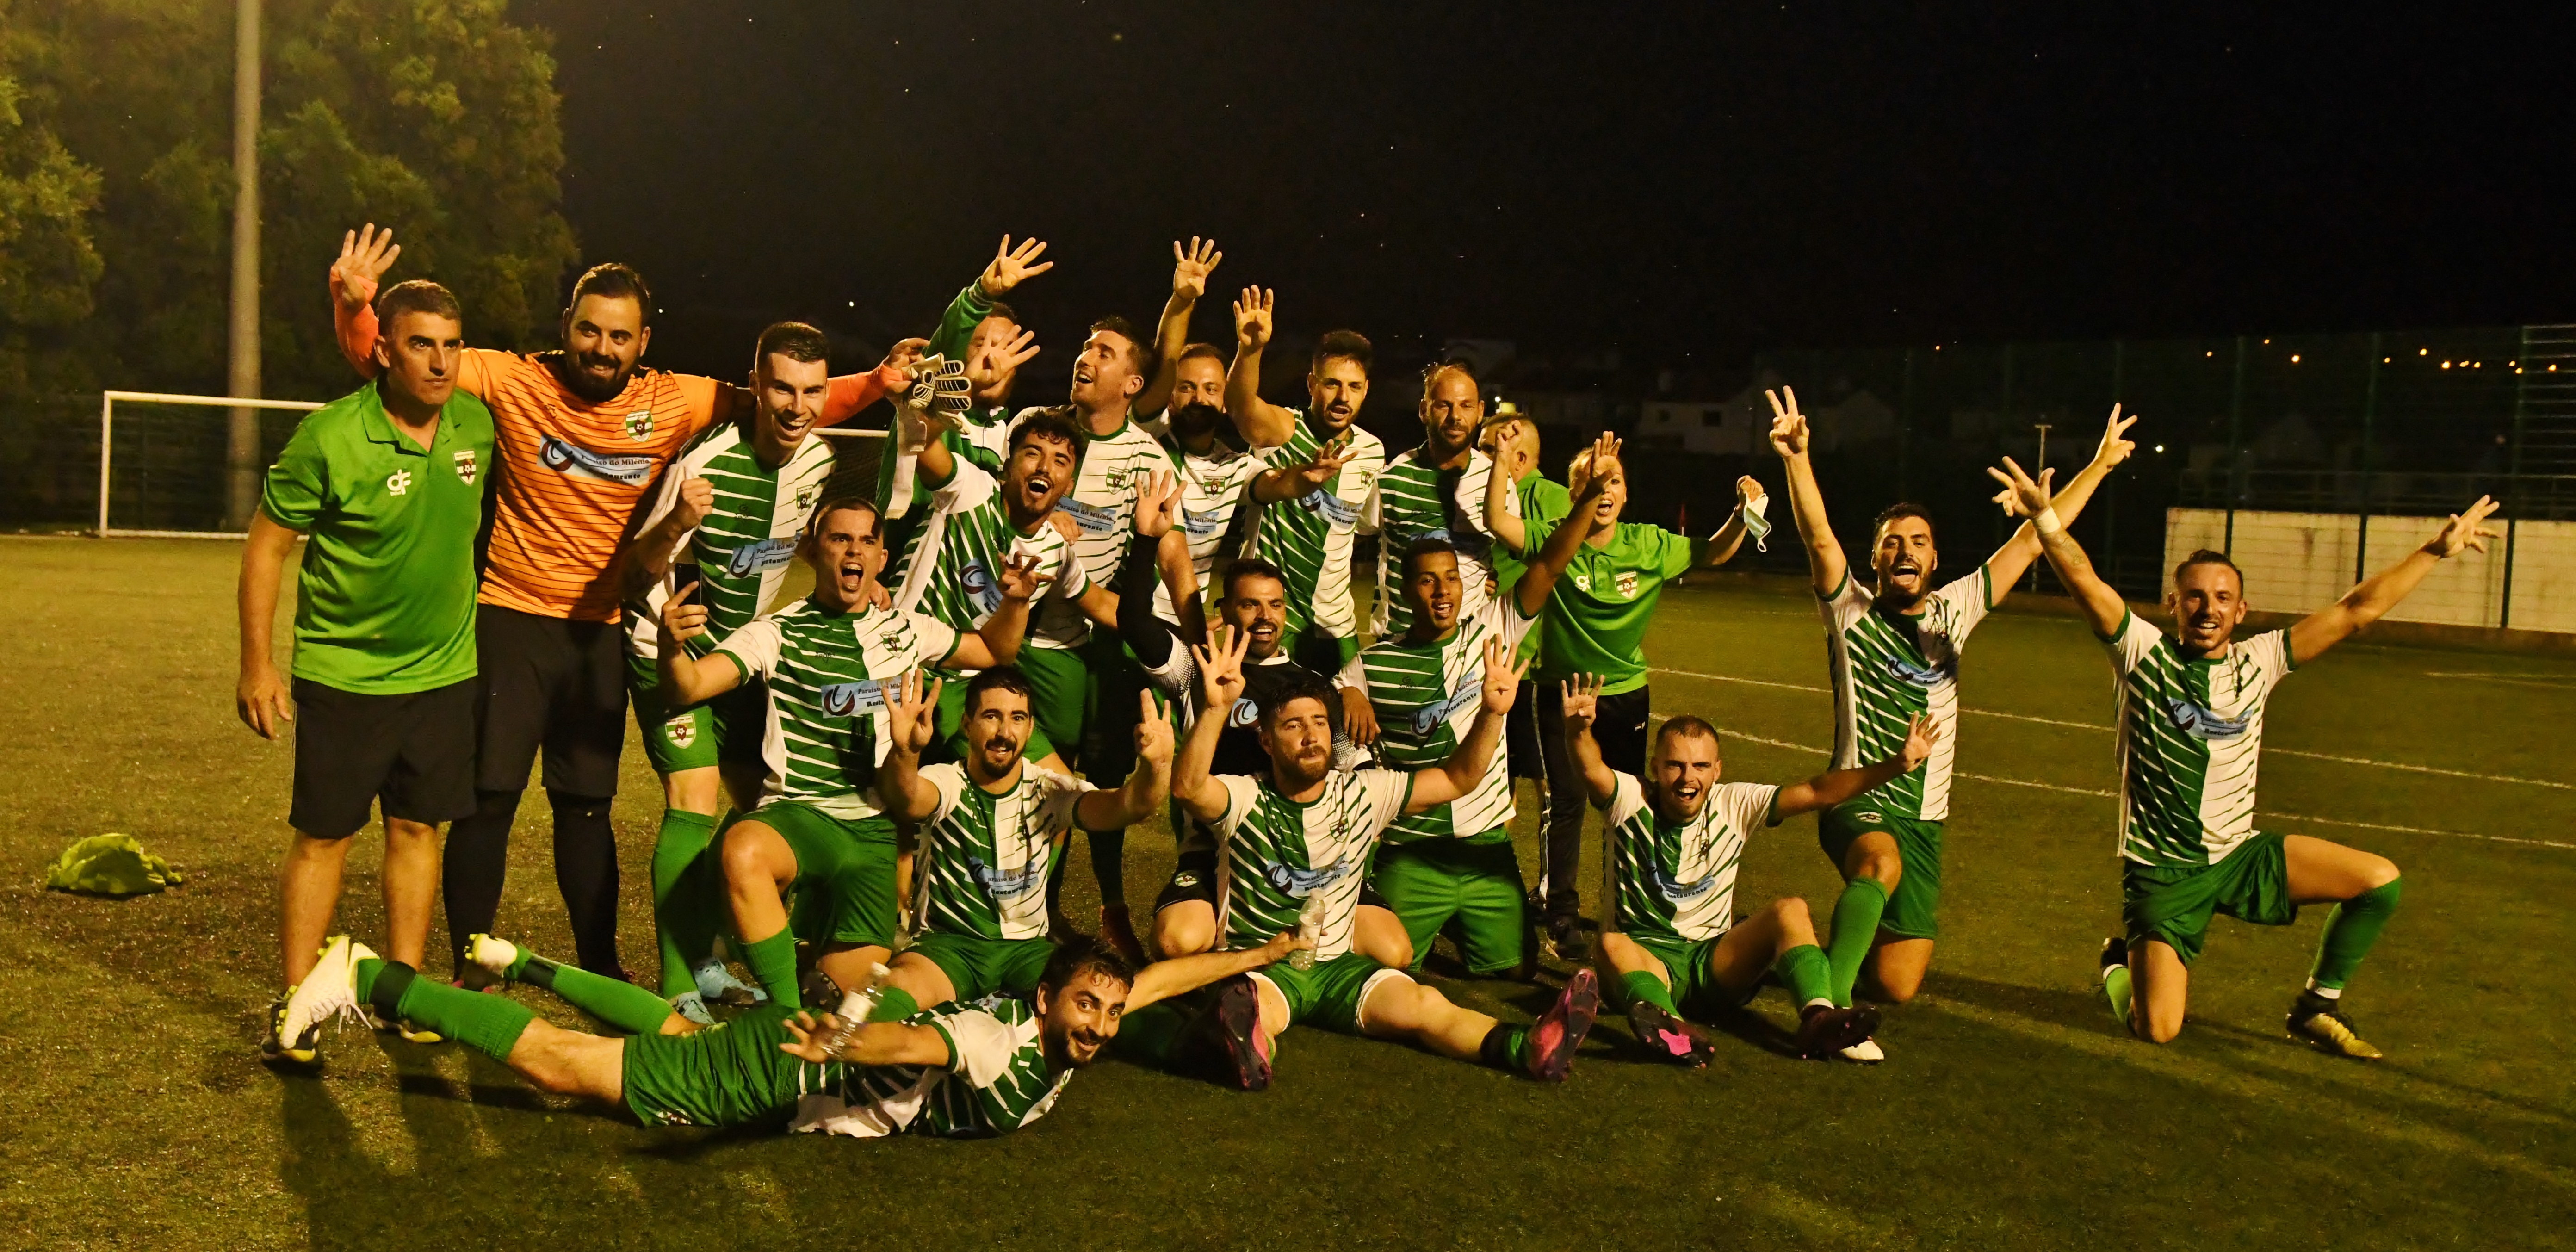 Santiago FC sobe ao Campeonato de Futebol dos Açores